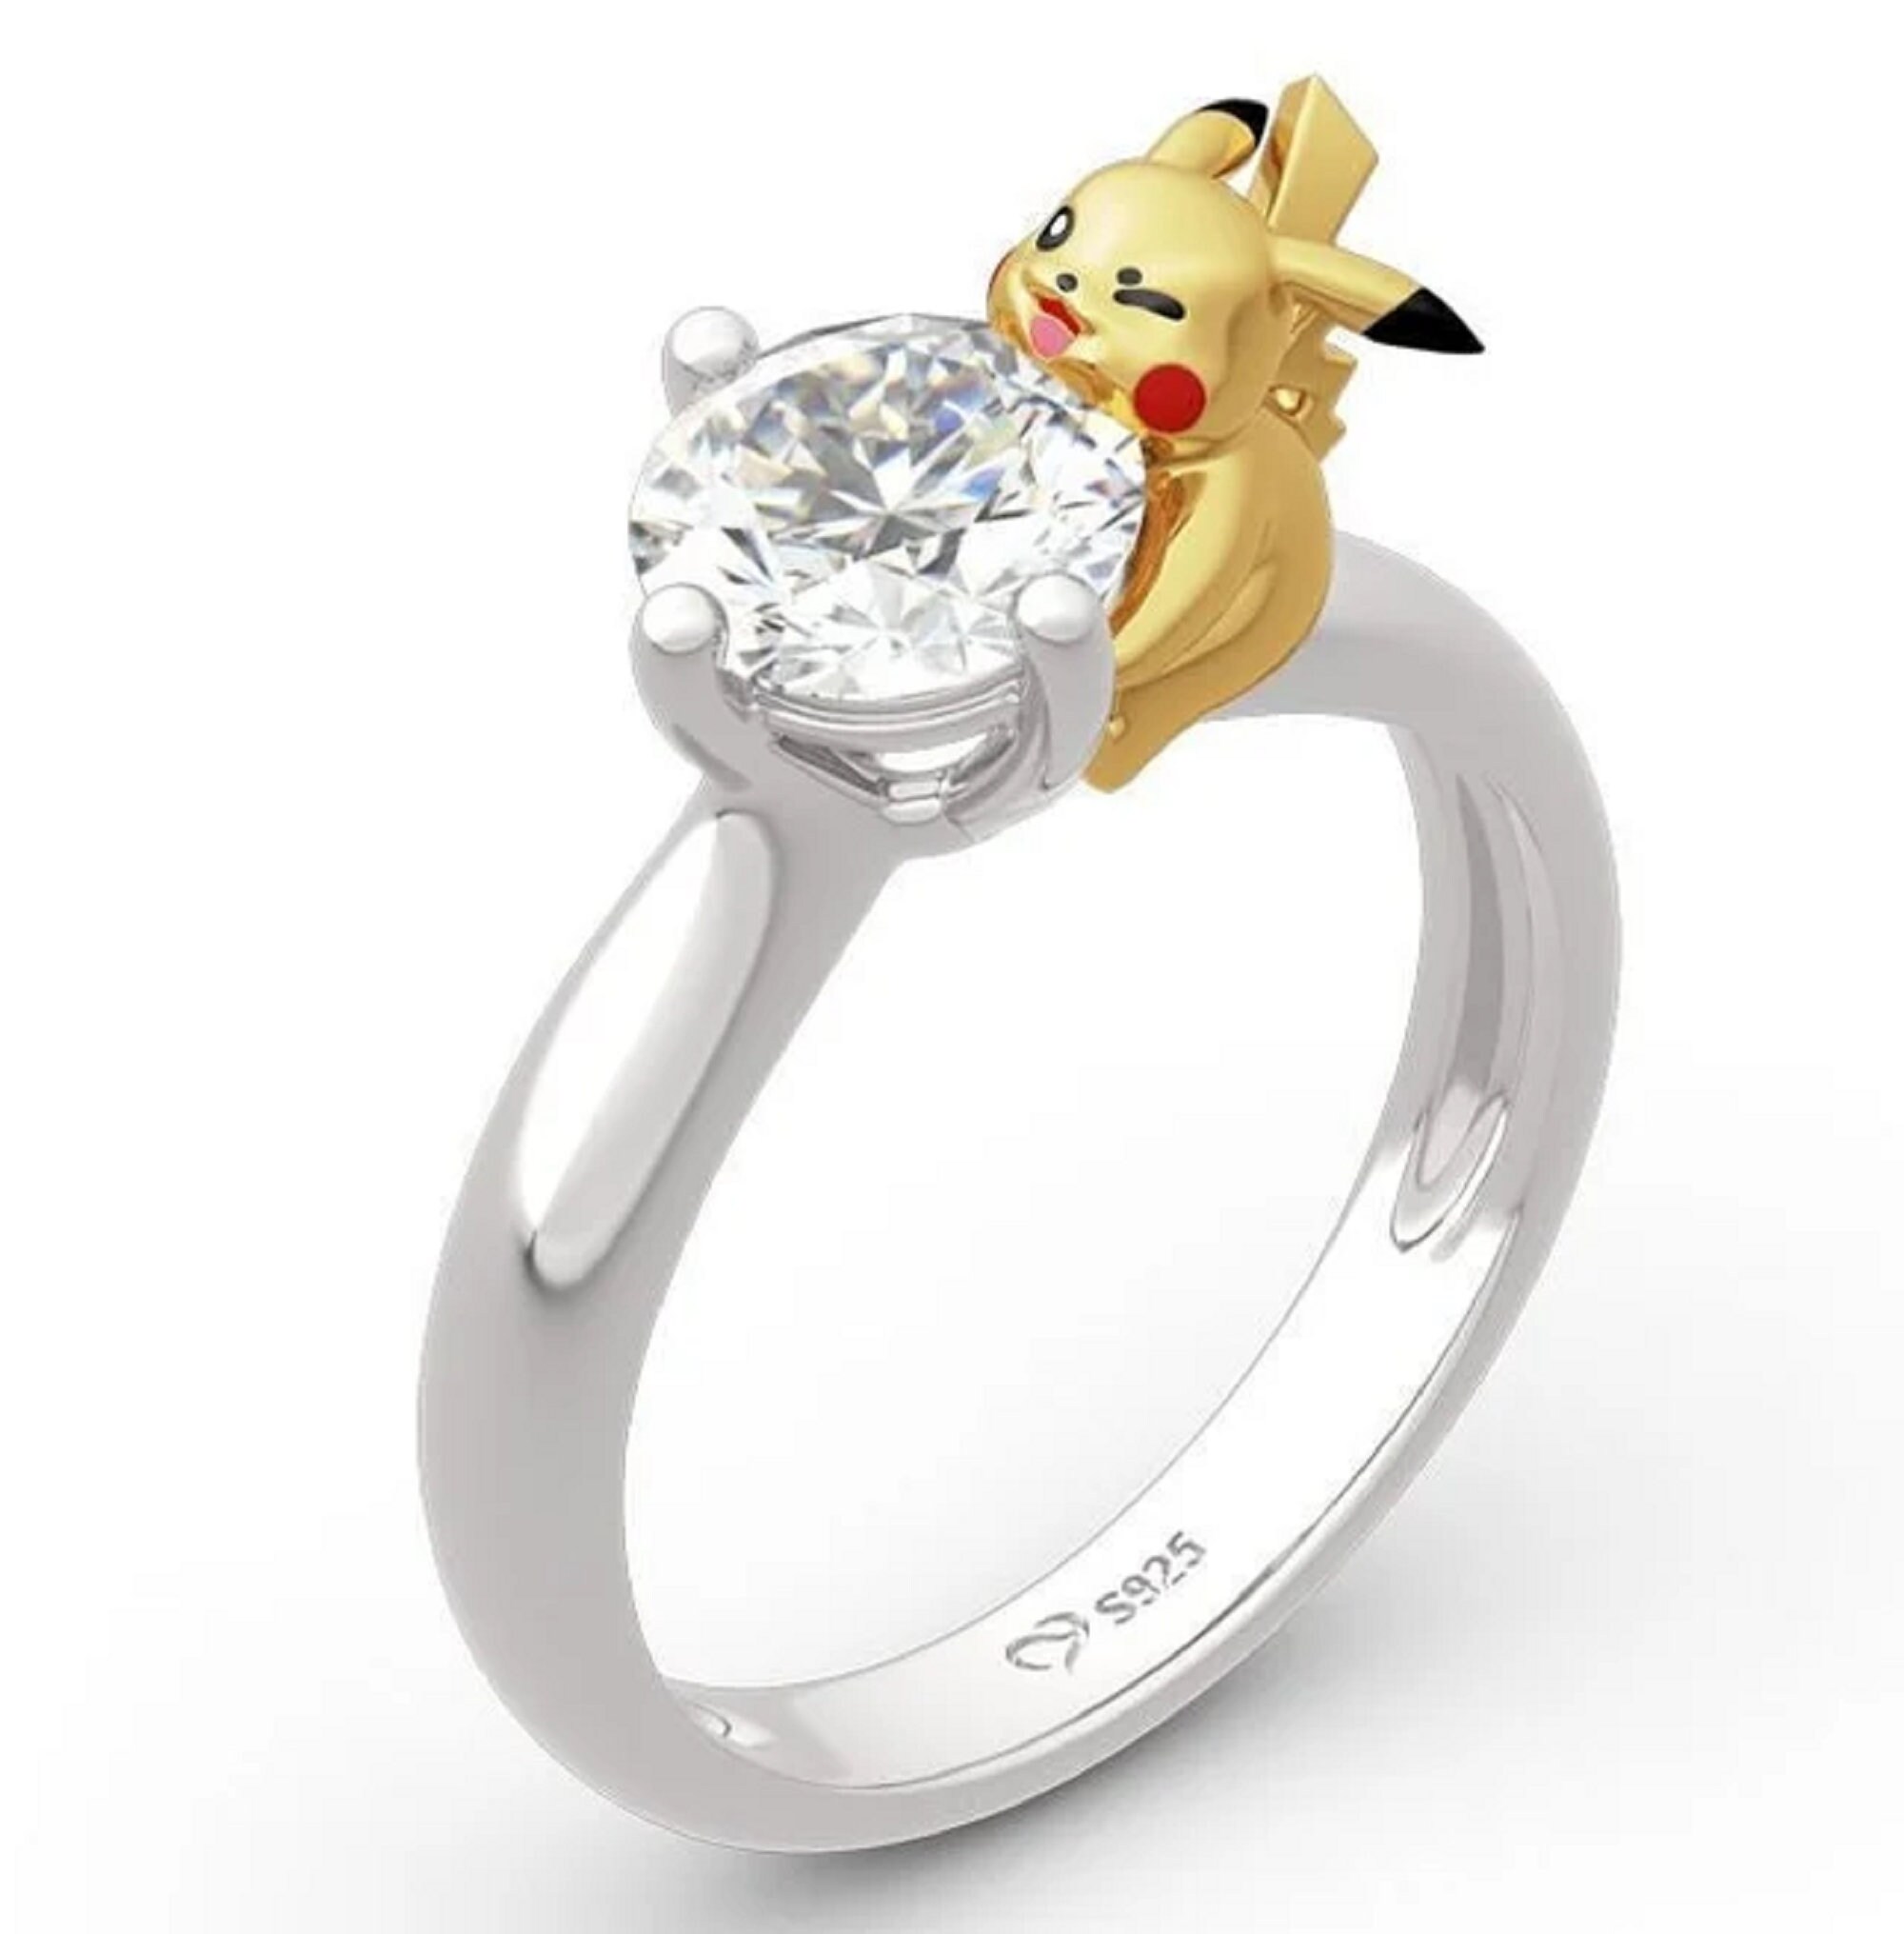 Pikachu Ring-Pokémon Ring 925 Sterling Silver Ring Anime - Etsy Canada